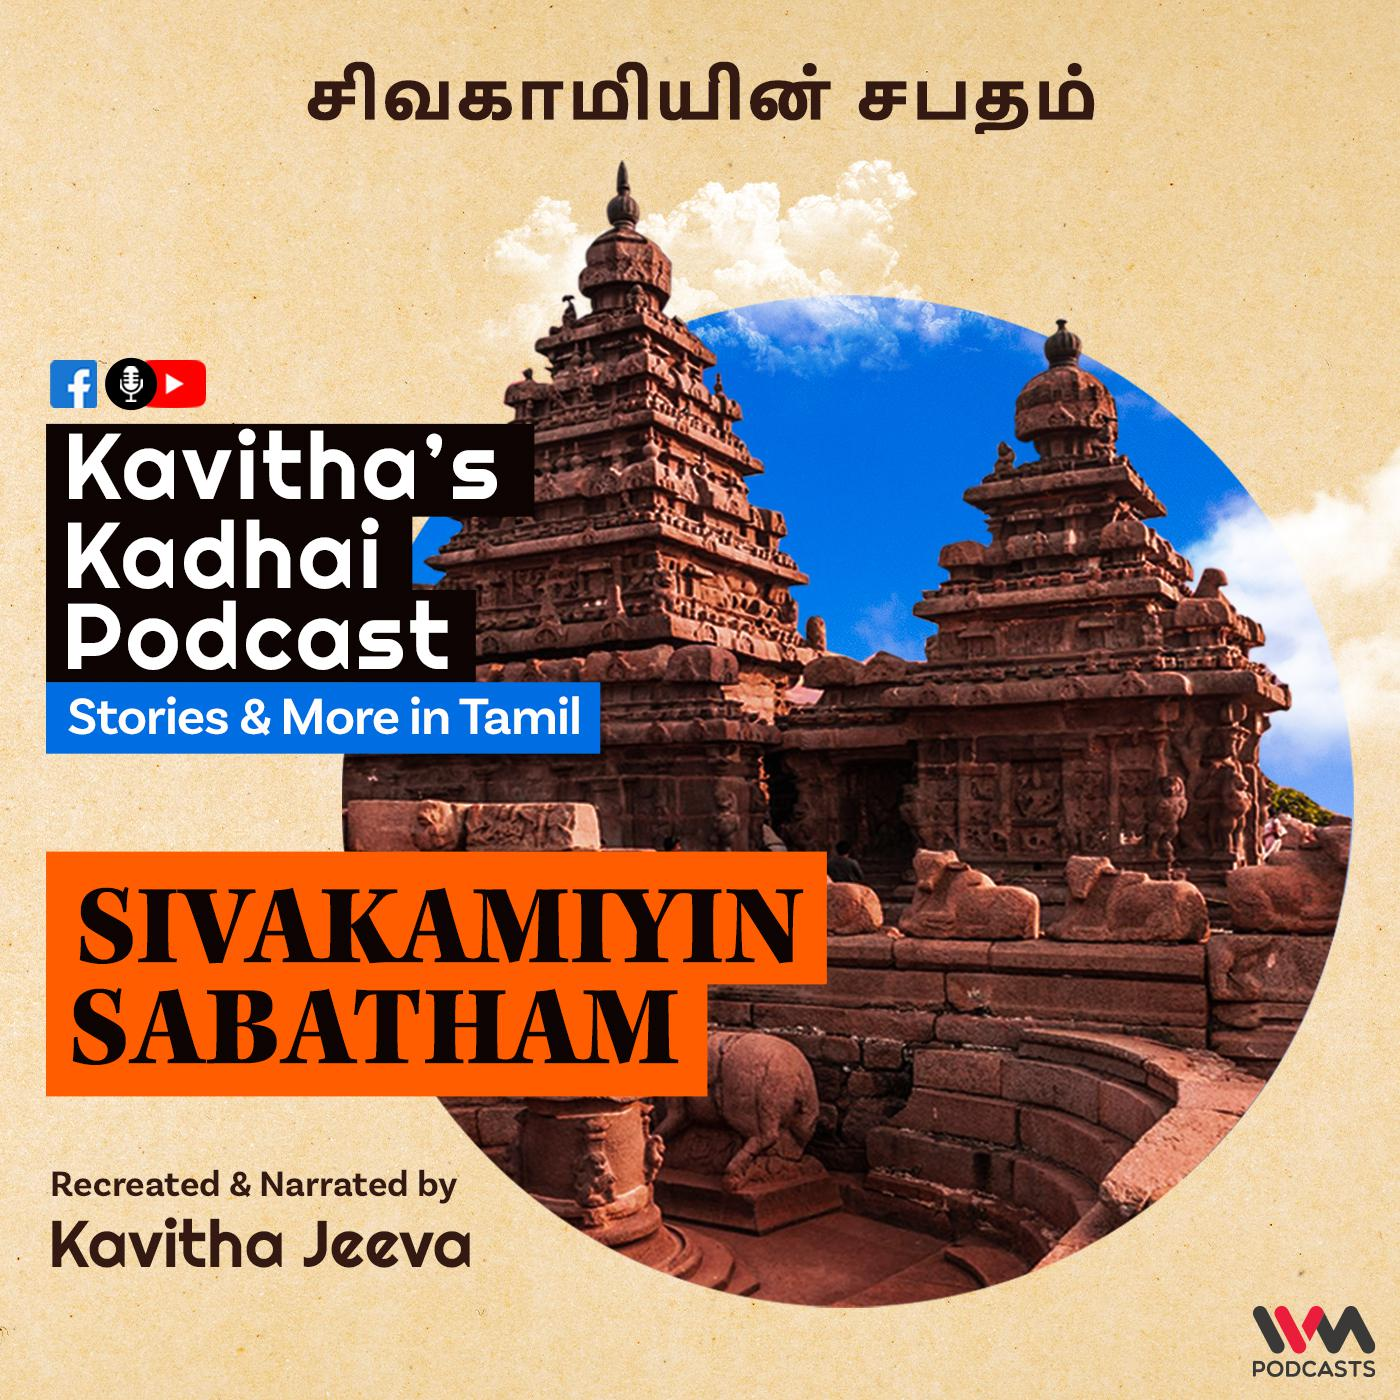 KadhaiPodcast's Sivakamiyin Sabatham with Kavitha Jeeva - Episode #131